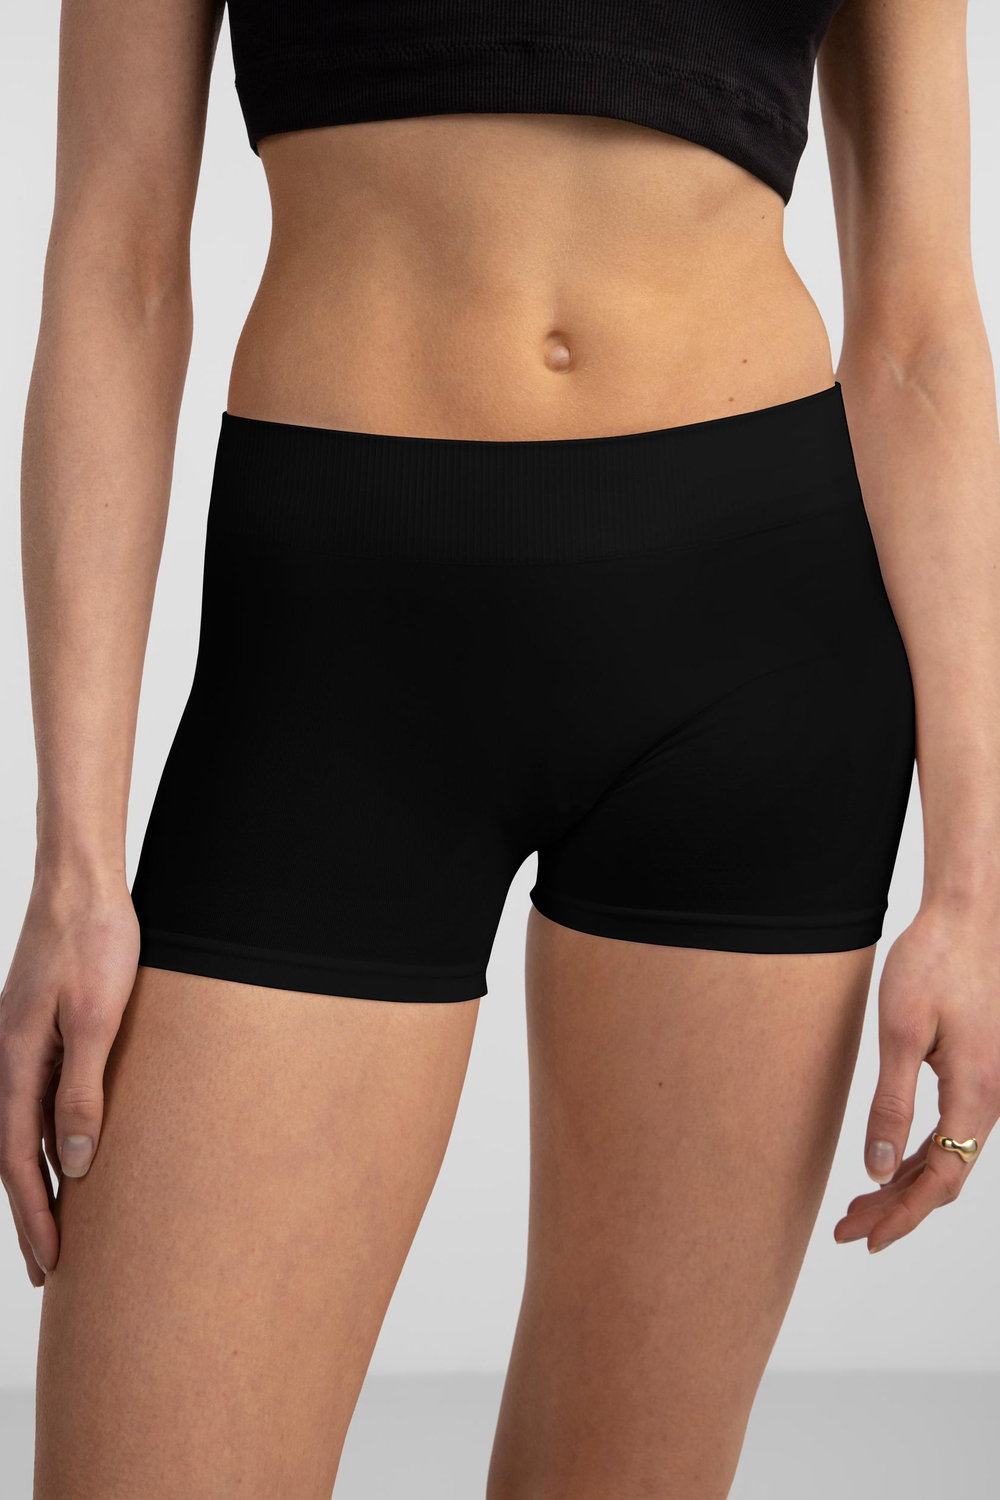 Empirisch Zuivelproducten raken pclondon mini shorts noos bc 17065440 pieces ondergoed black